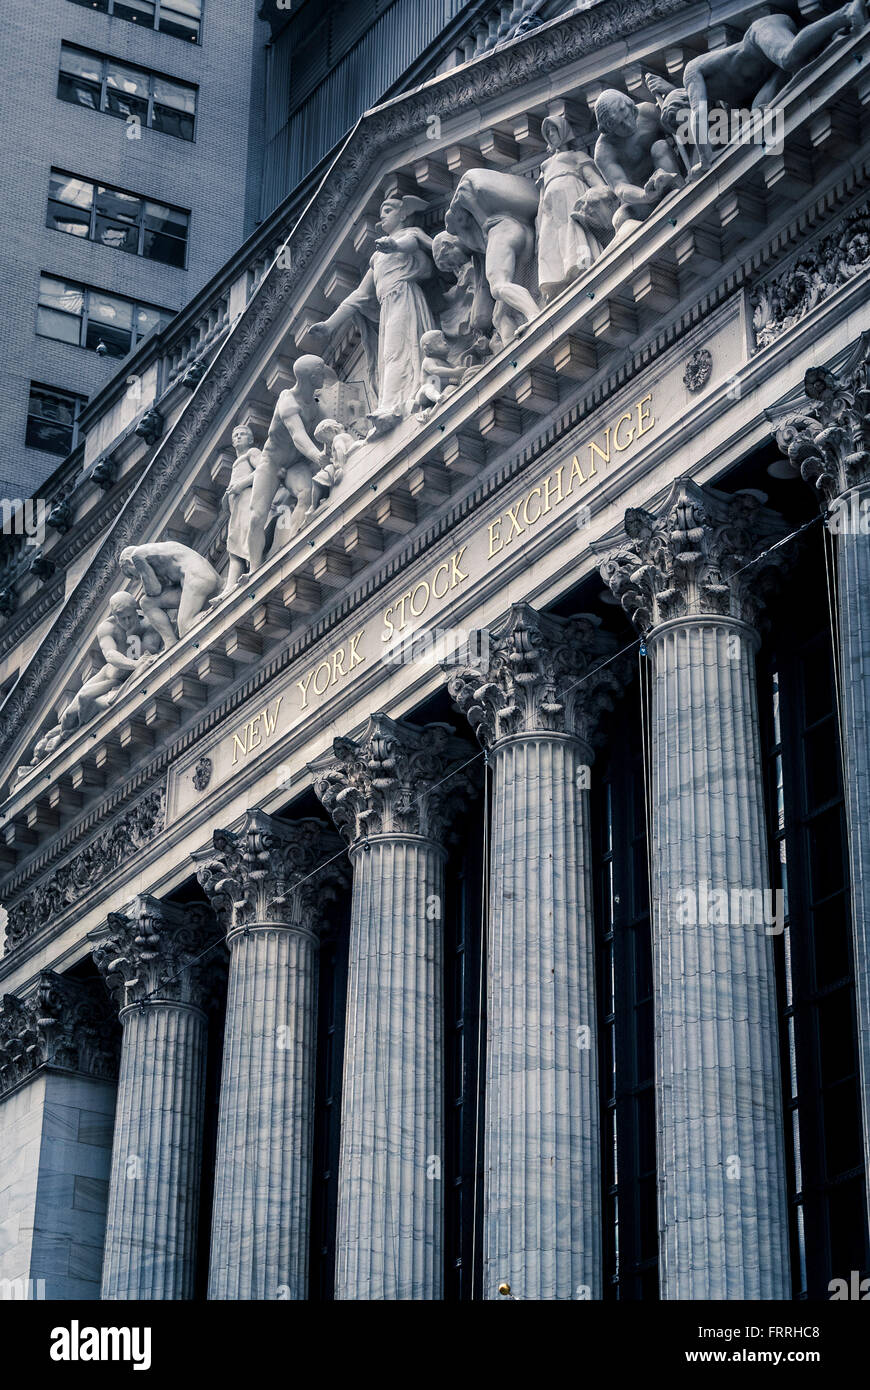 Bolsa de Valores de Nueva York, Wall Street, New York City, Estados Unidos  Fotografía de stock - Alamy